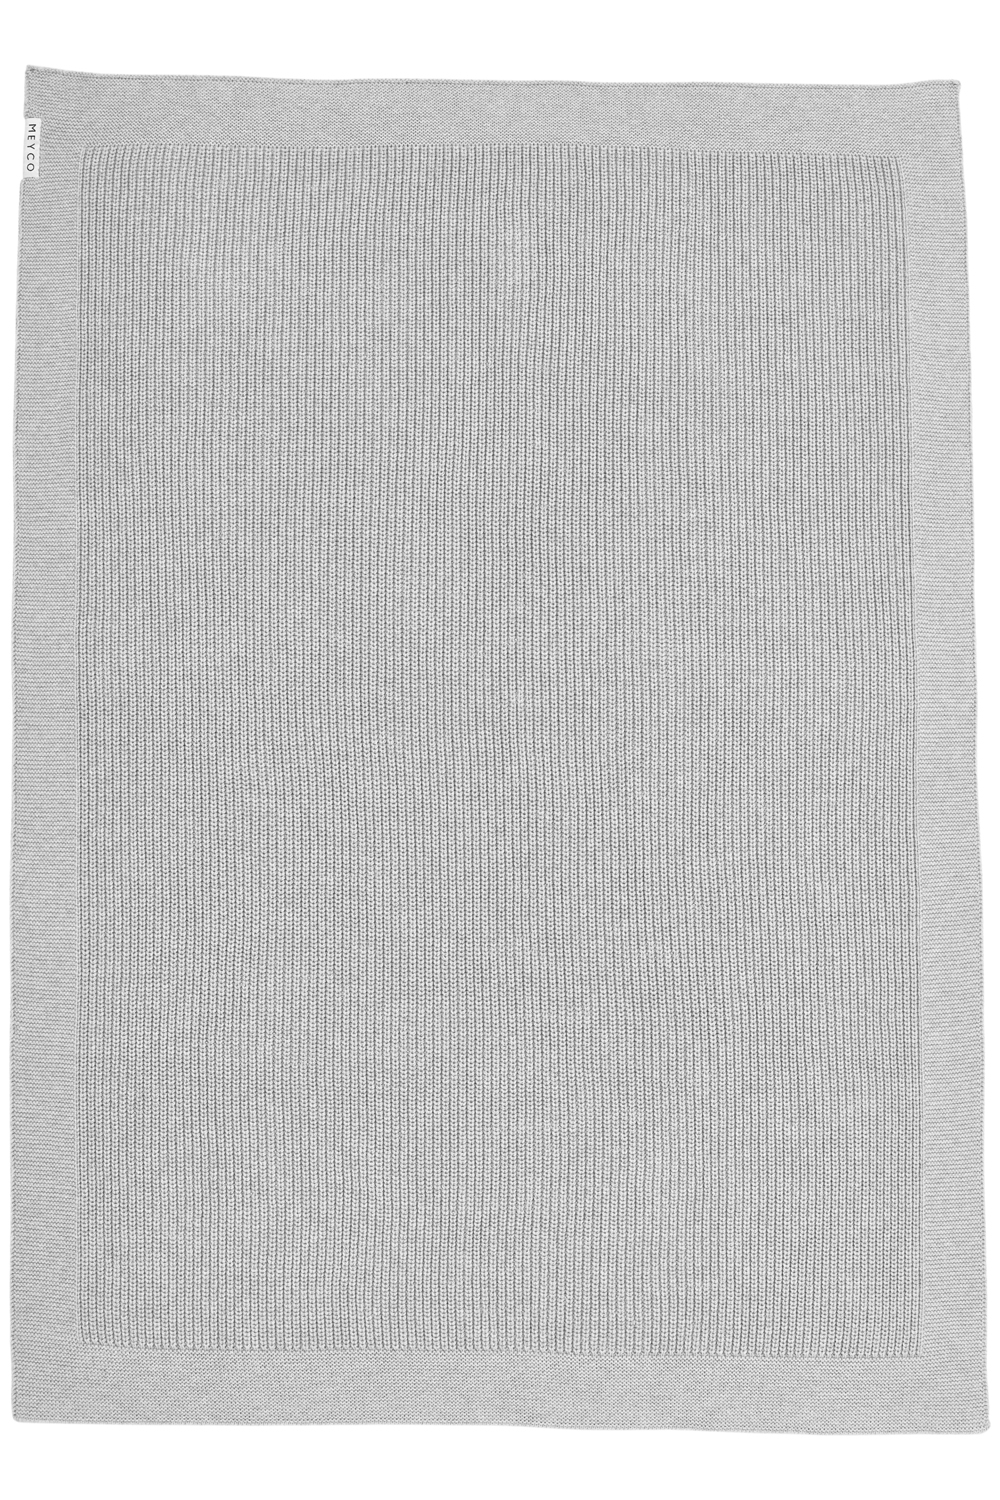 Ledikant deken Rib - grey melange - 100x150cm